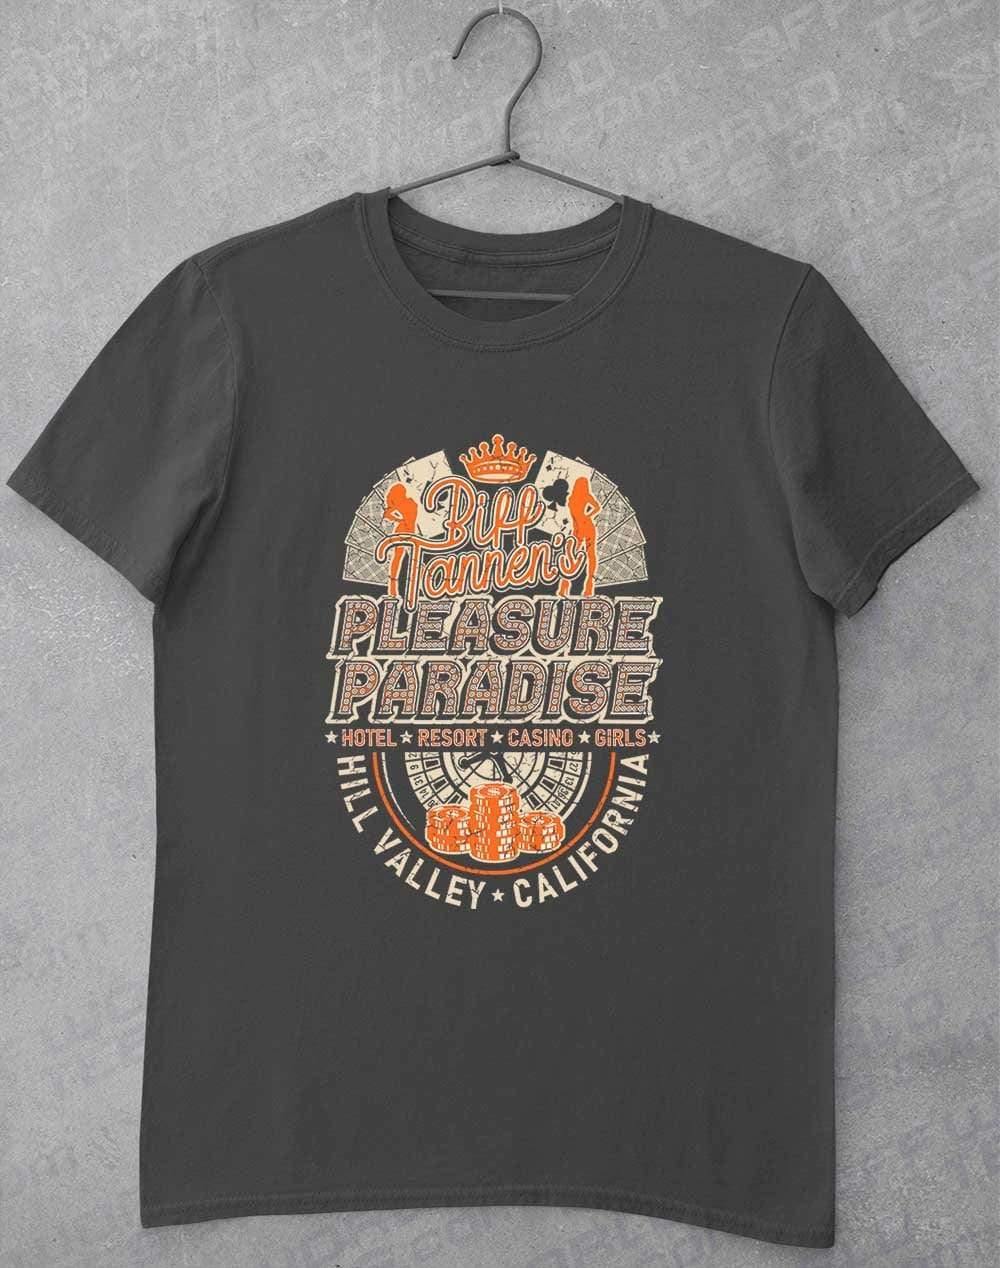 Biff Tannen's Pleasure Paradise T-Shirt S / Charcoal  - Off World Tees